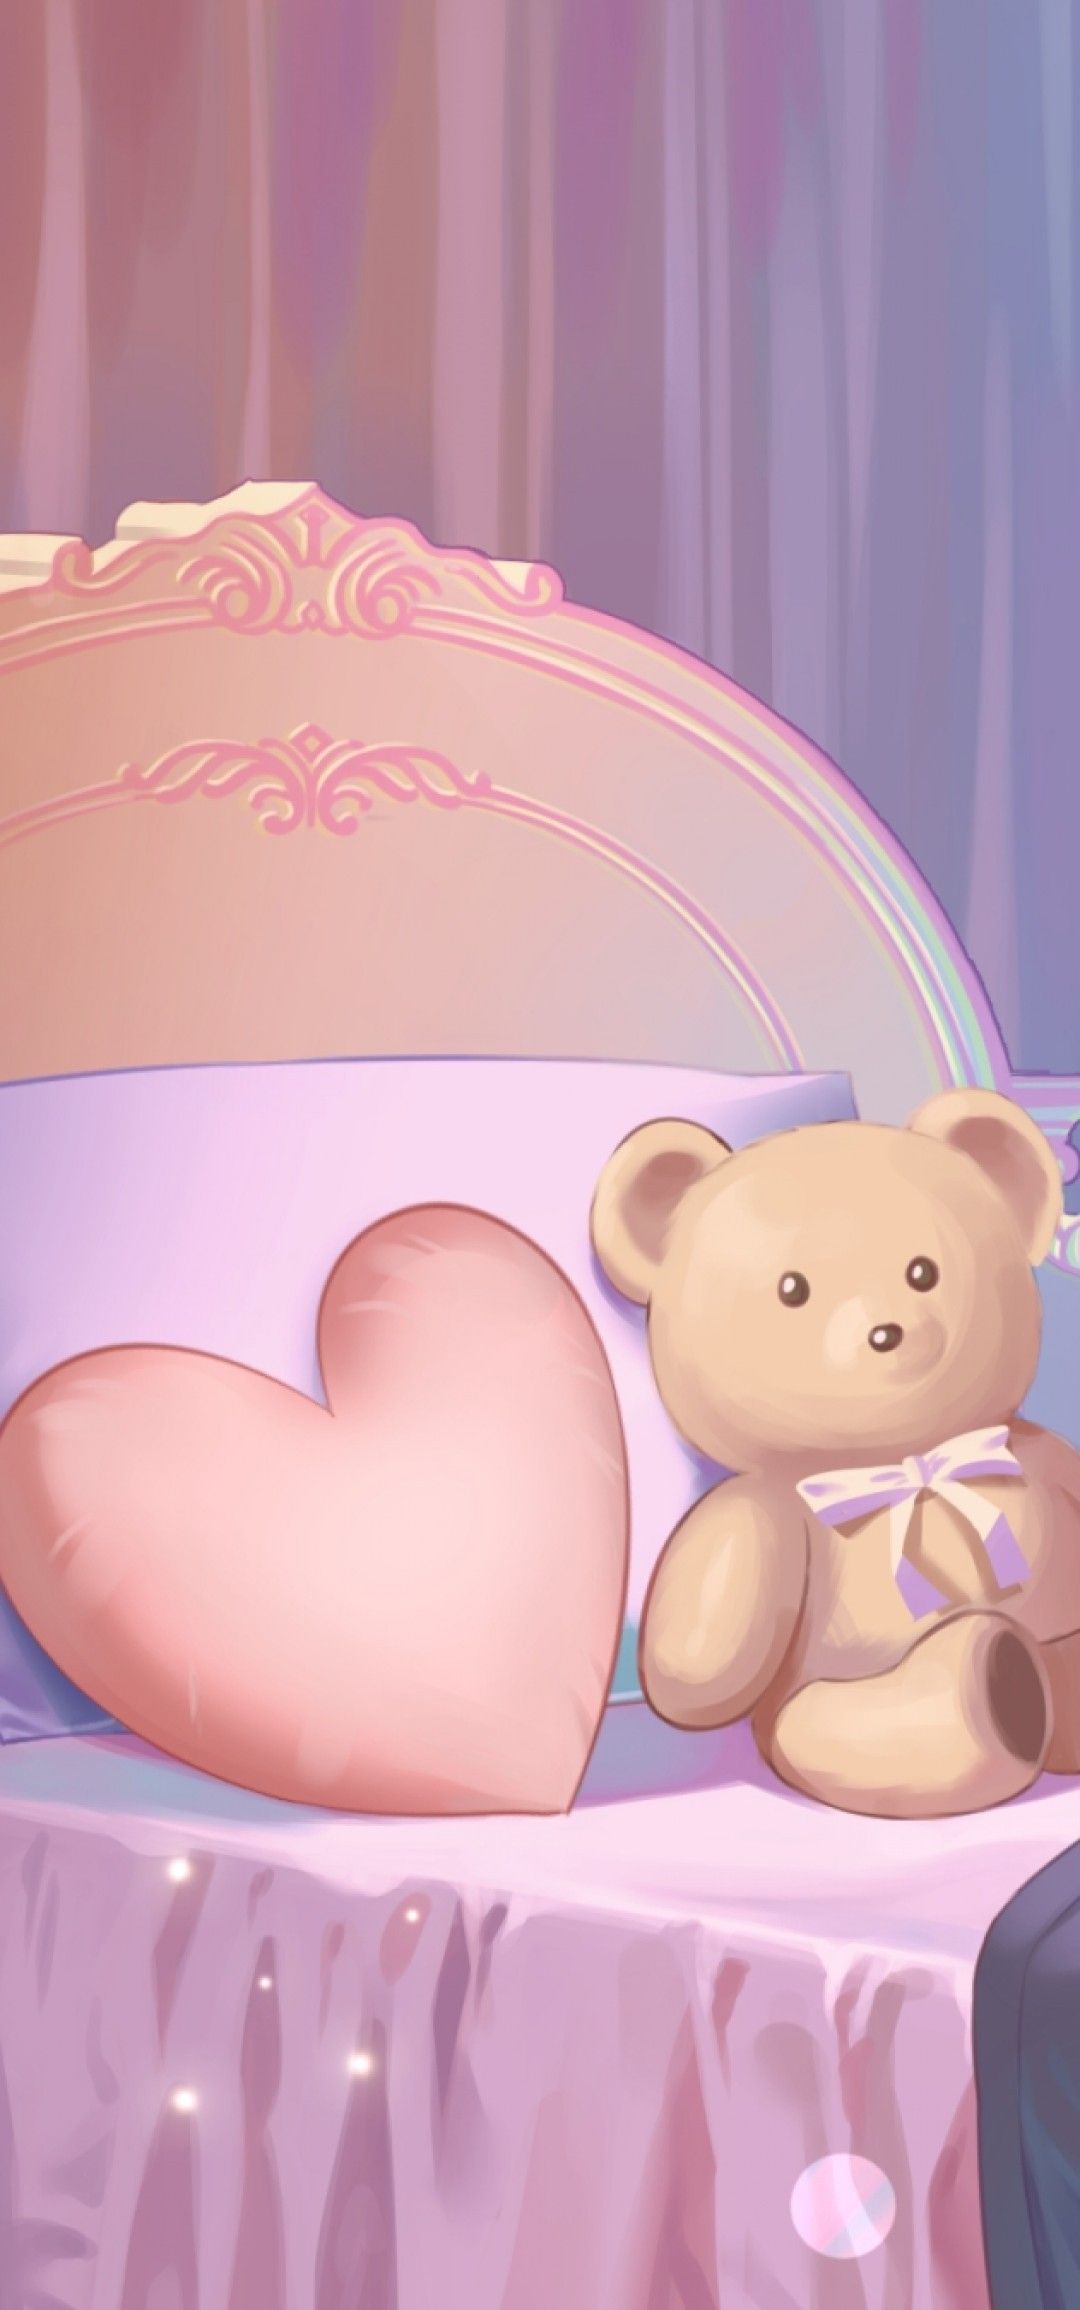 Download 1080x2310 Cute Anime Girl, Teddy Bear, Pillow, Curtain, Long Hair Wallpaper for Honor View 20